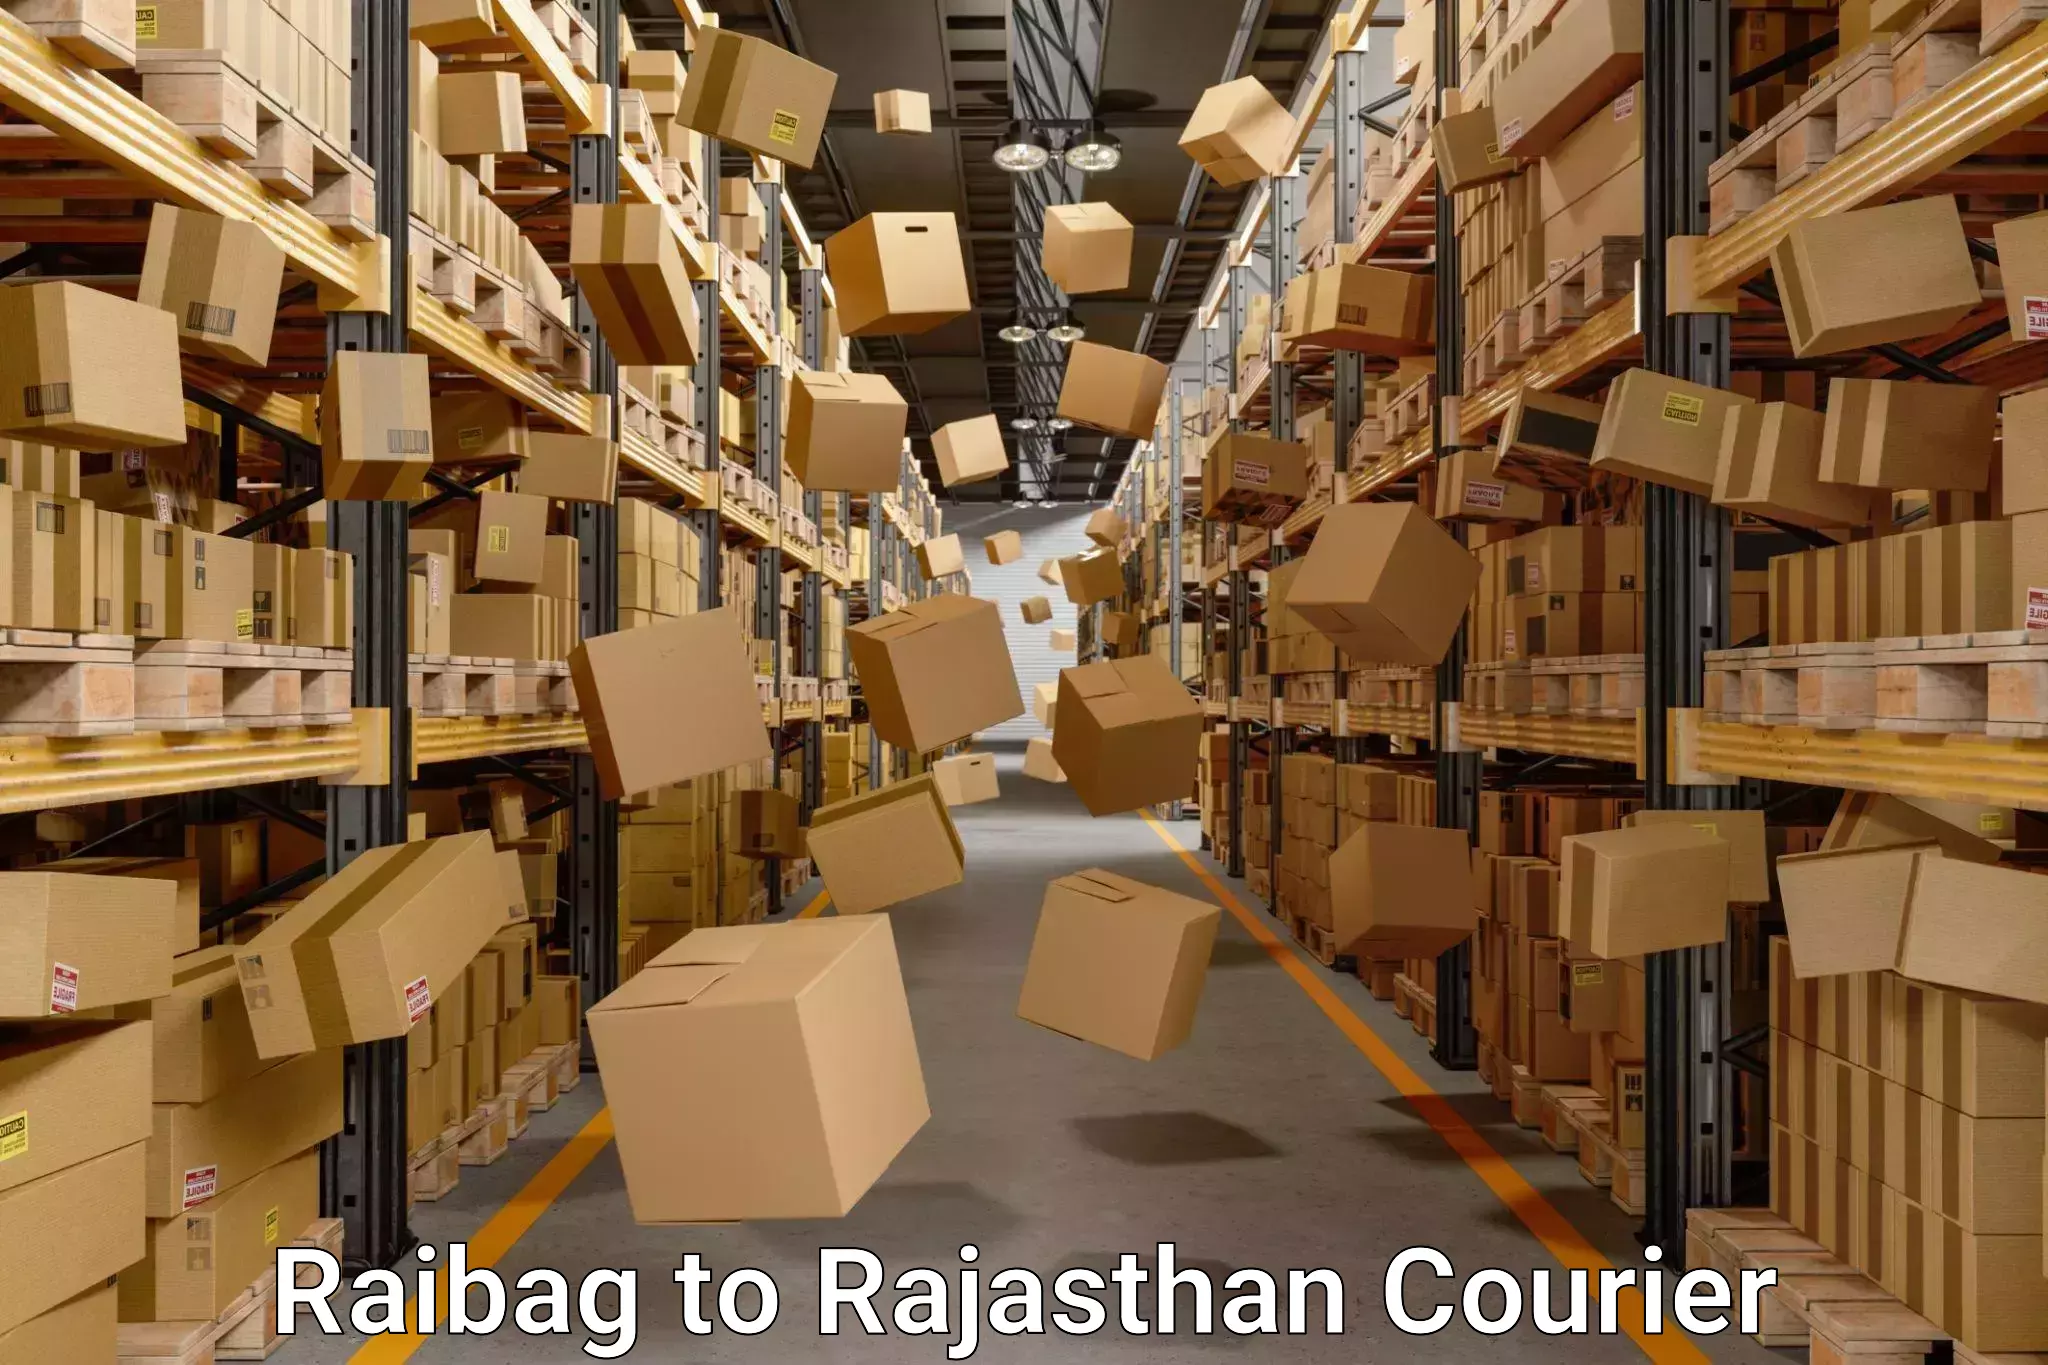 Professional moving company Raibag to Pali